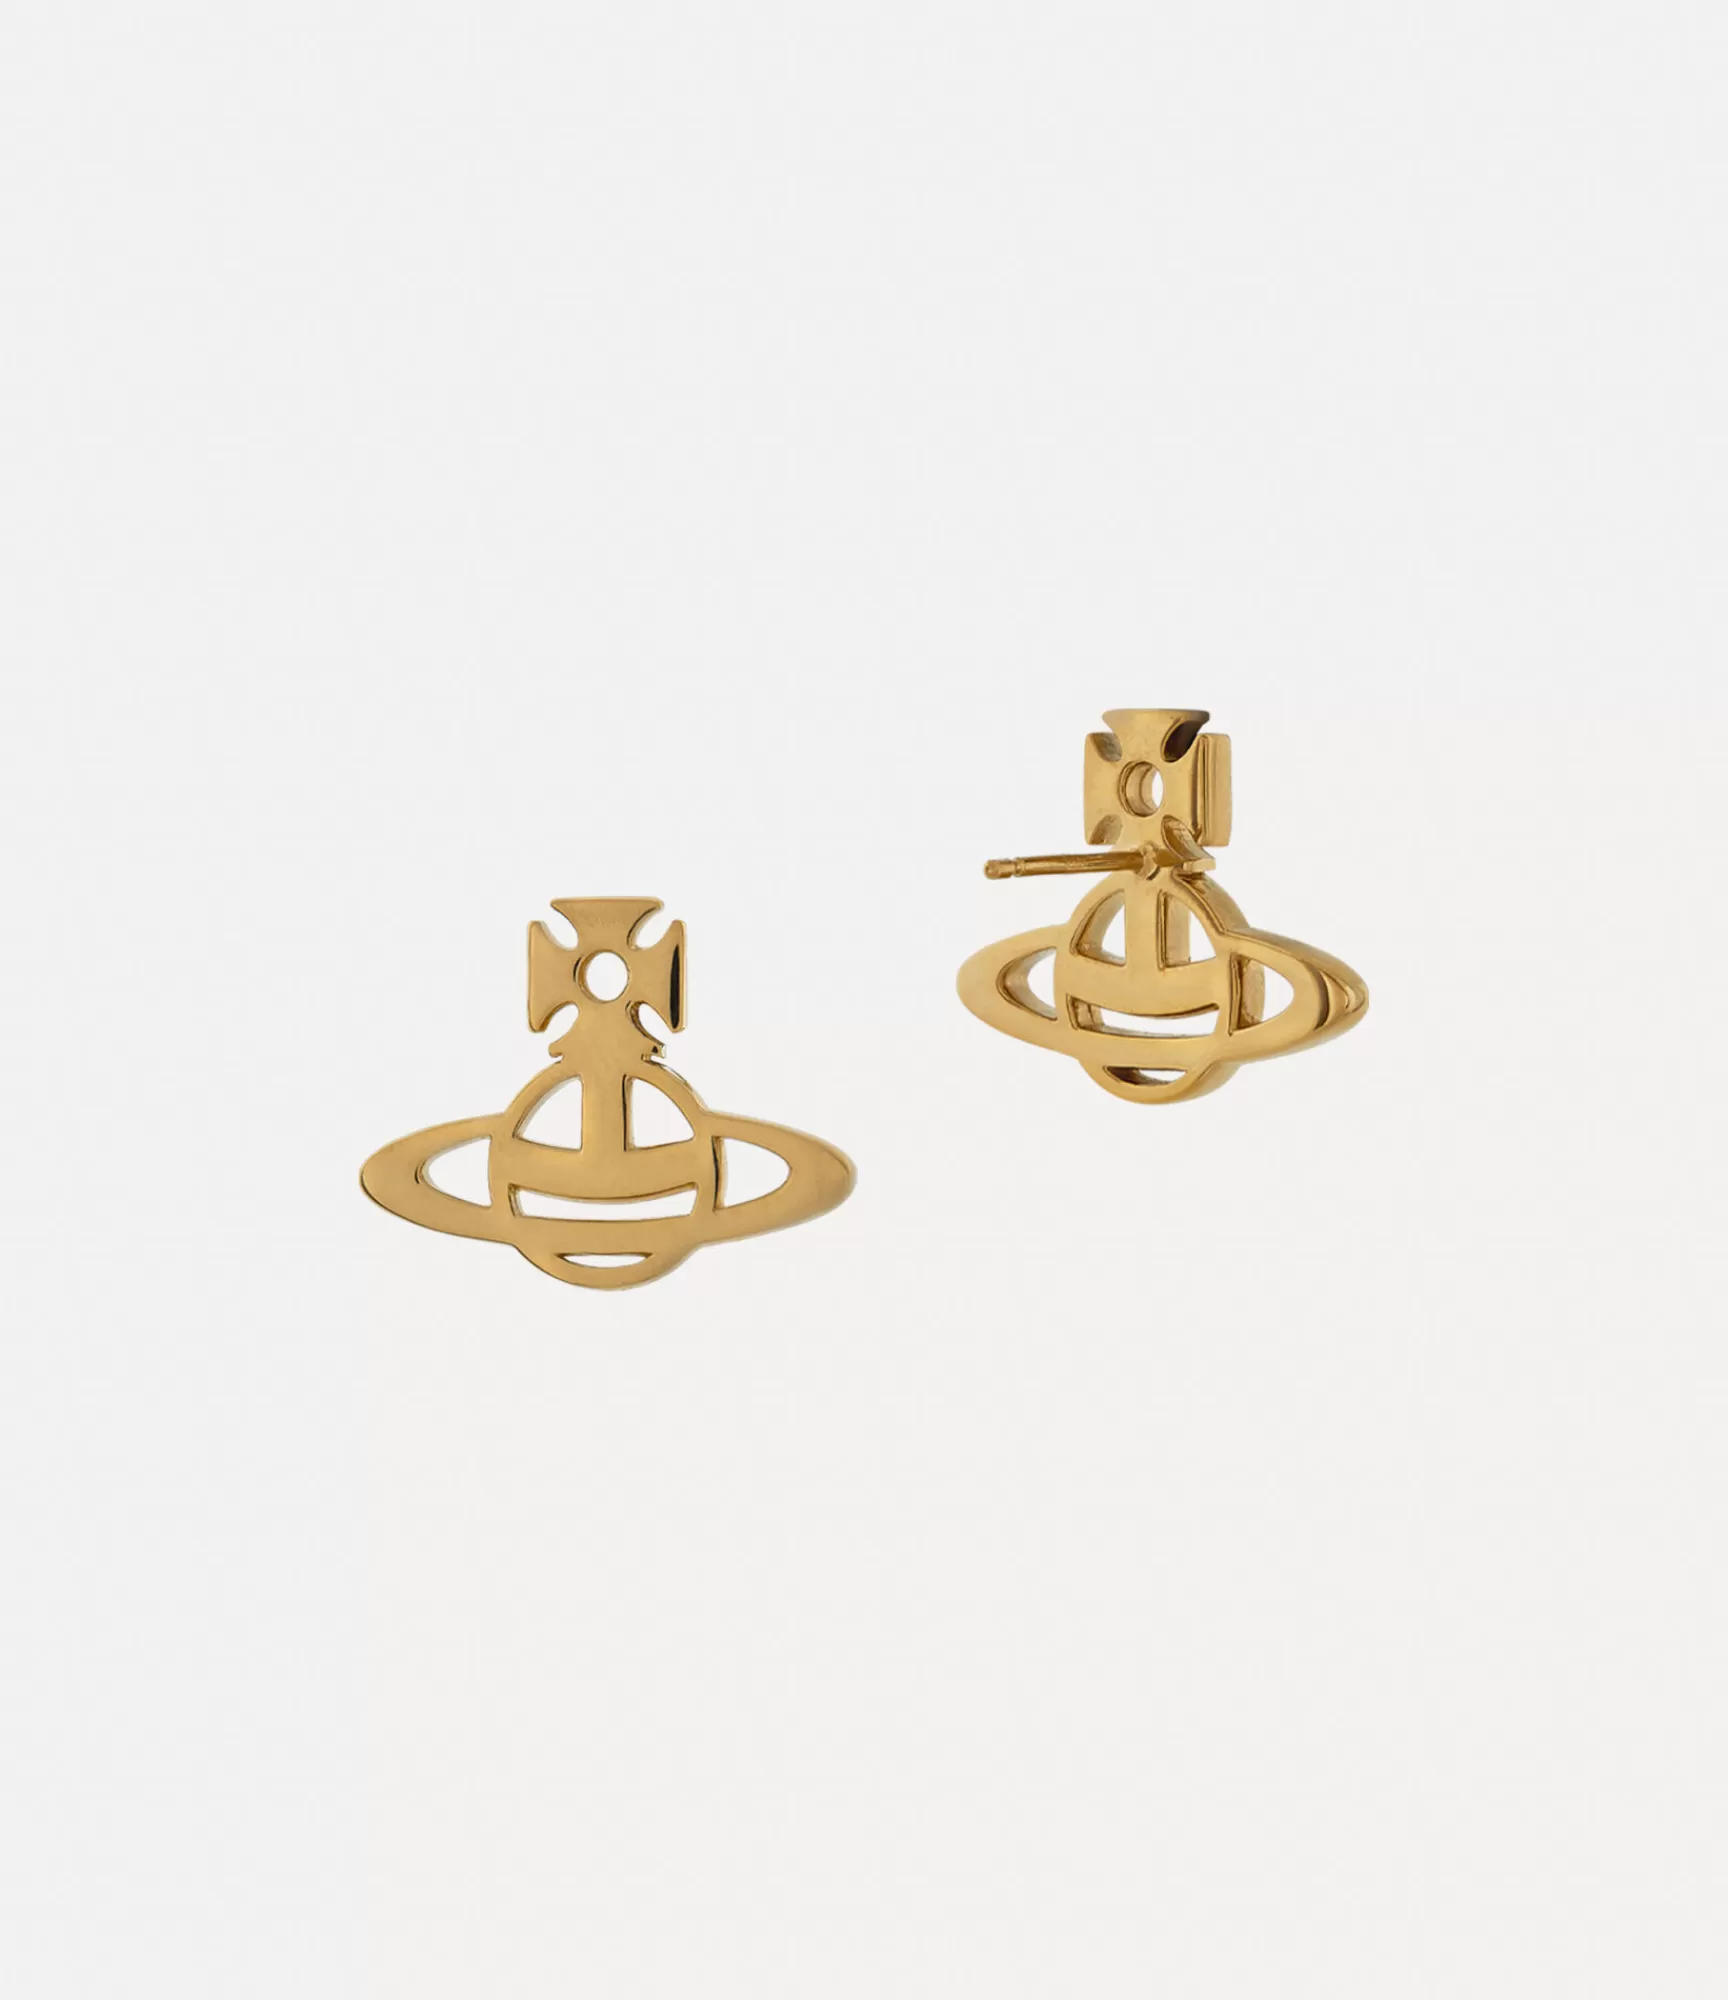 Vivienne Westwood Earrings*Lucy earrings Gold